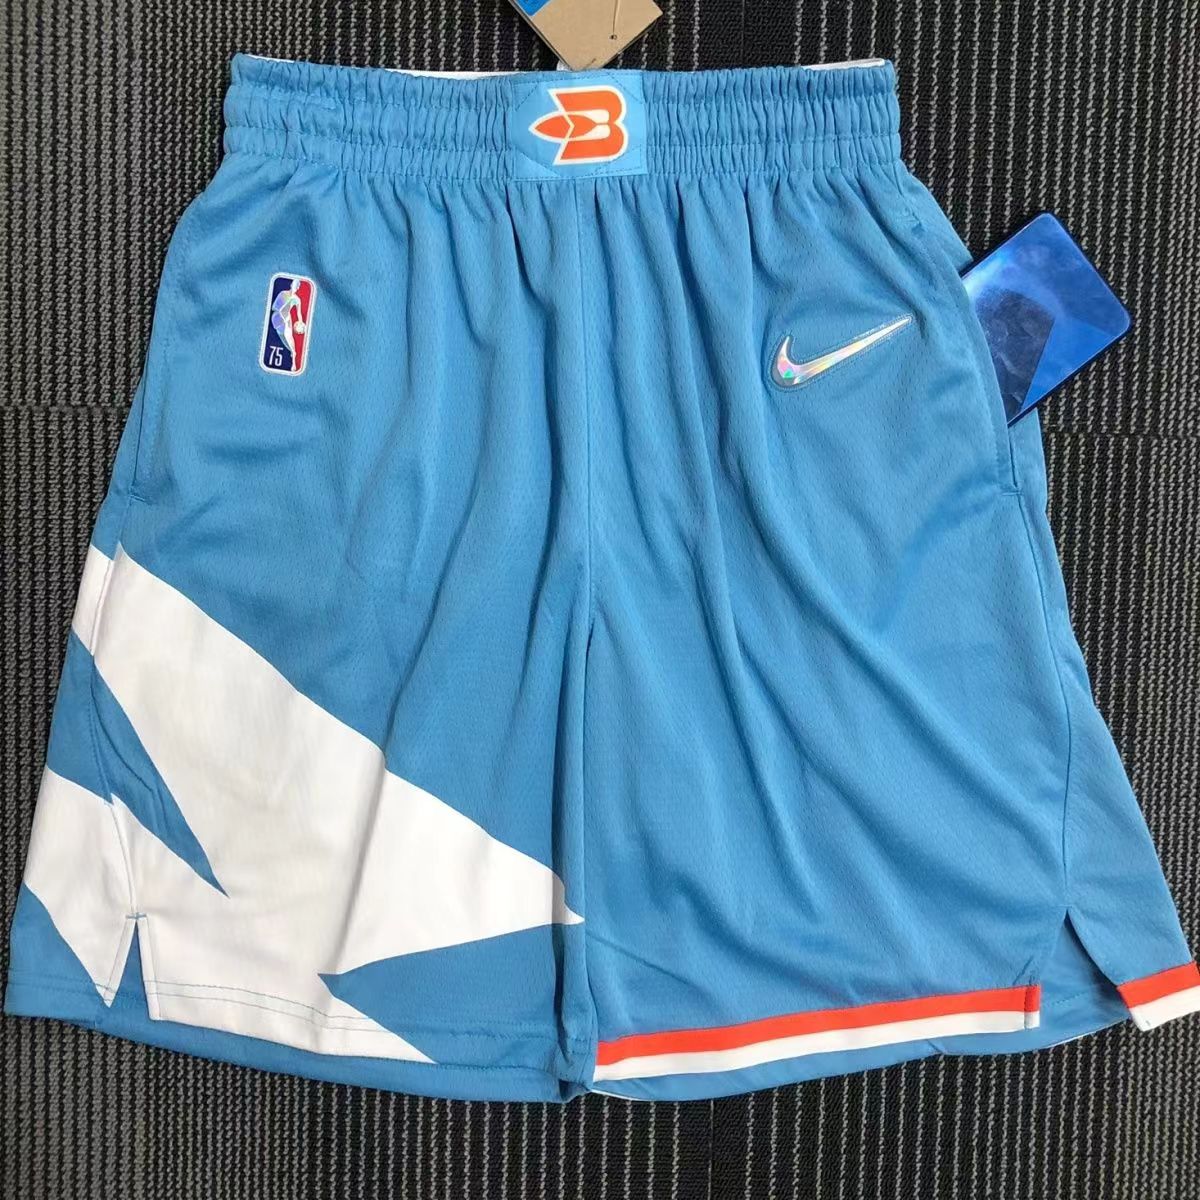 2021-22 New Original NBA Memphis Grizzlies Basketball Jersey Shorts for Men  Swingman Heat-pressed Retro City Edition Deep Blue with 75th Anniversary  Silver Diamond Swoosh